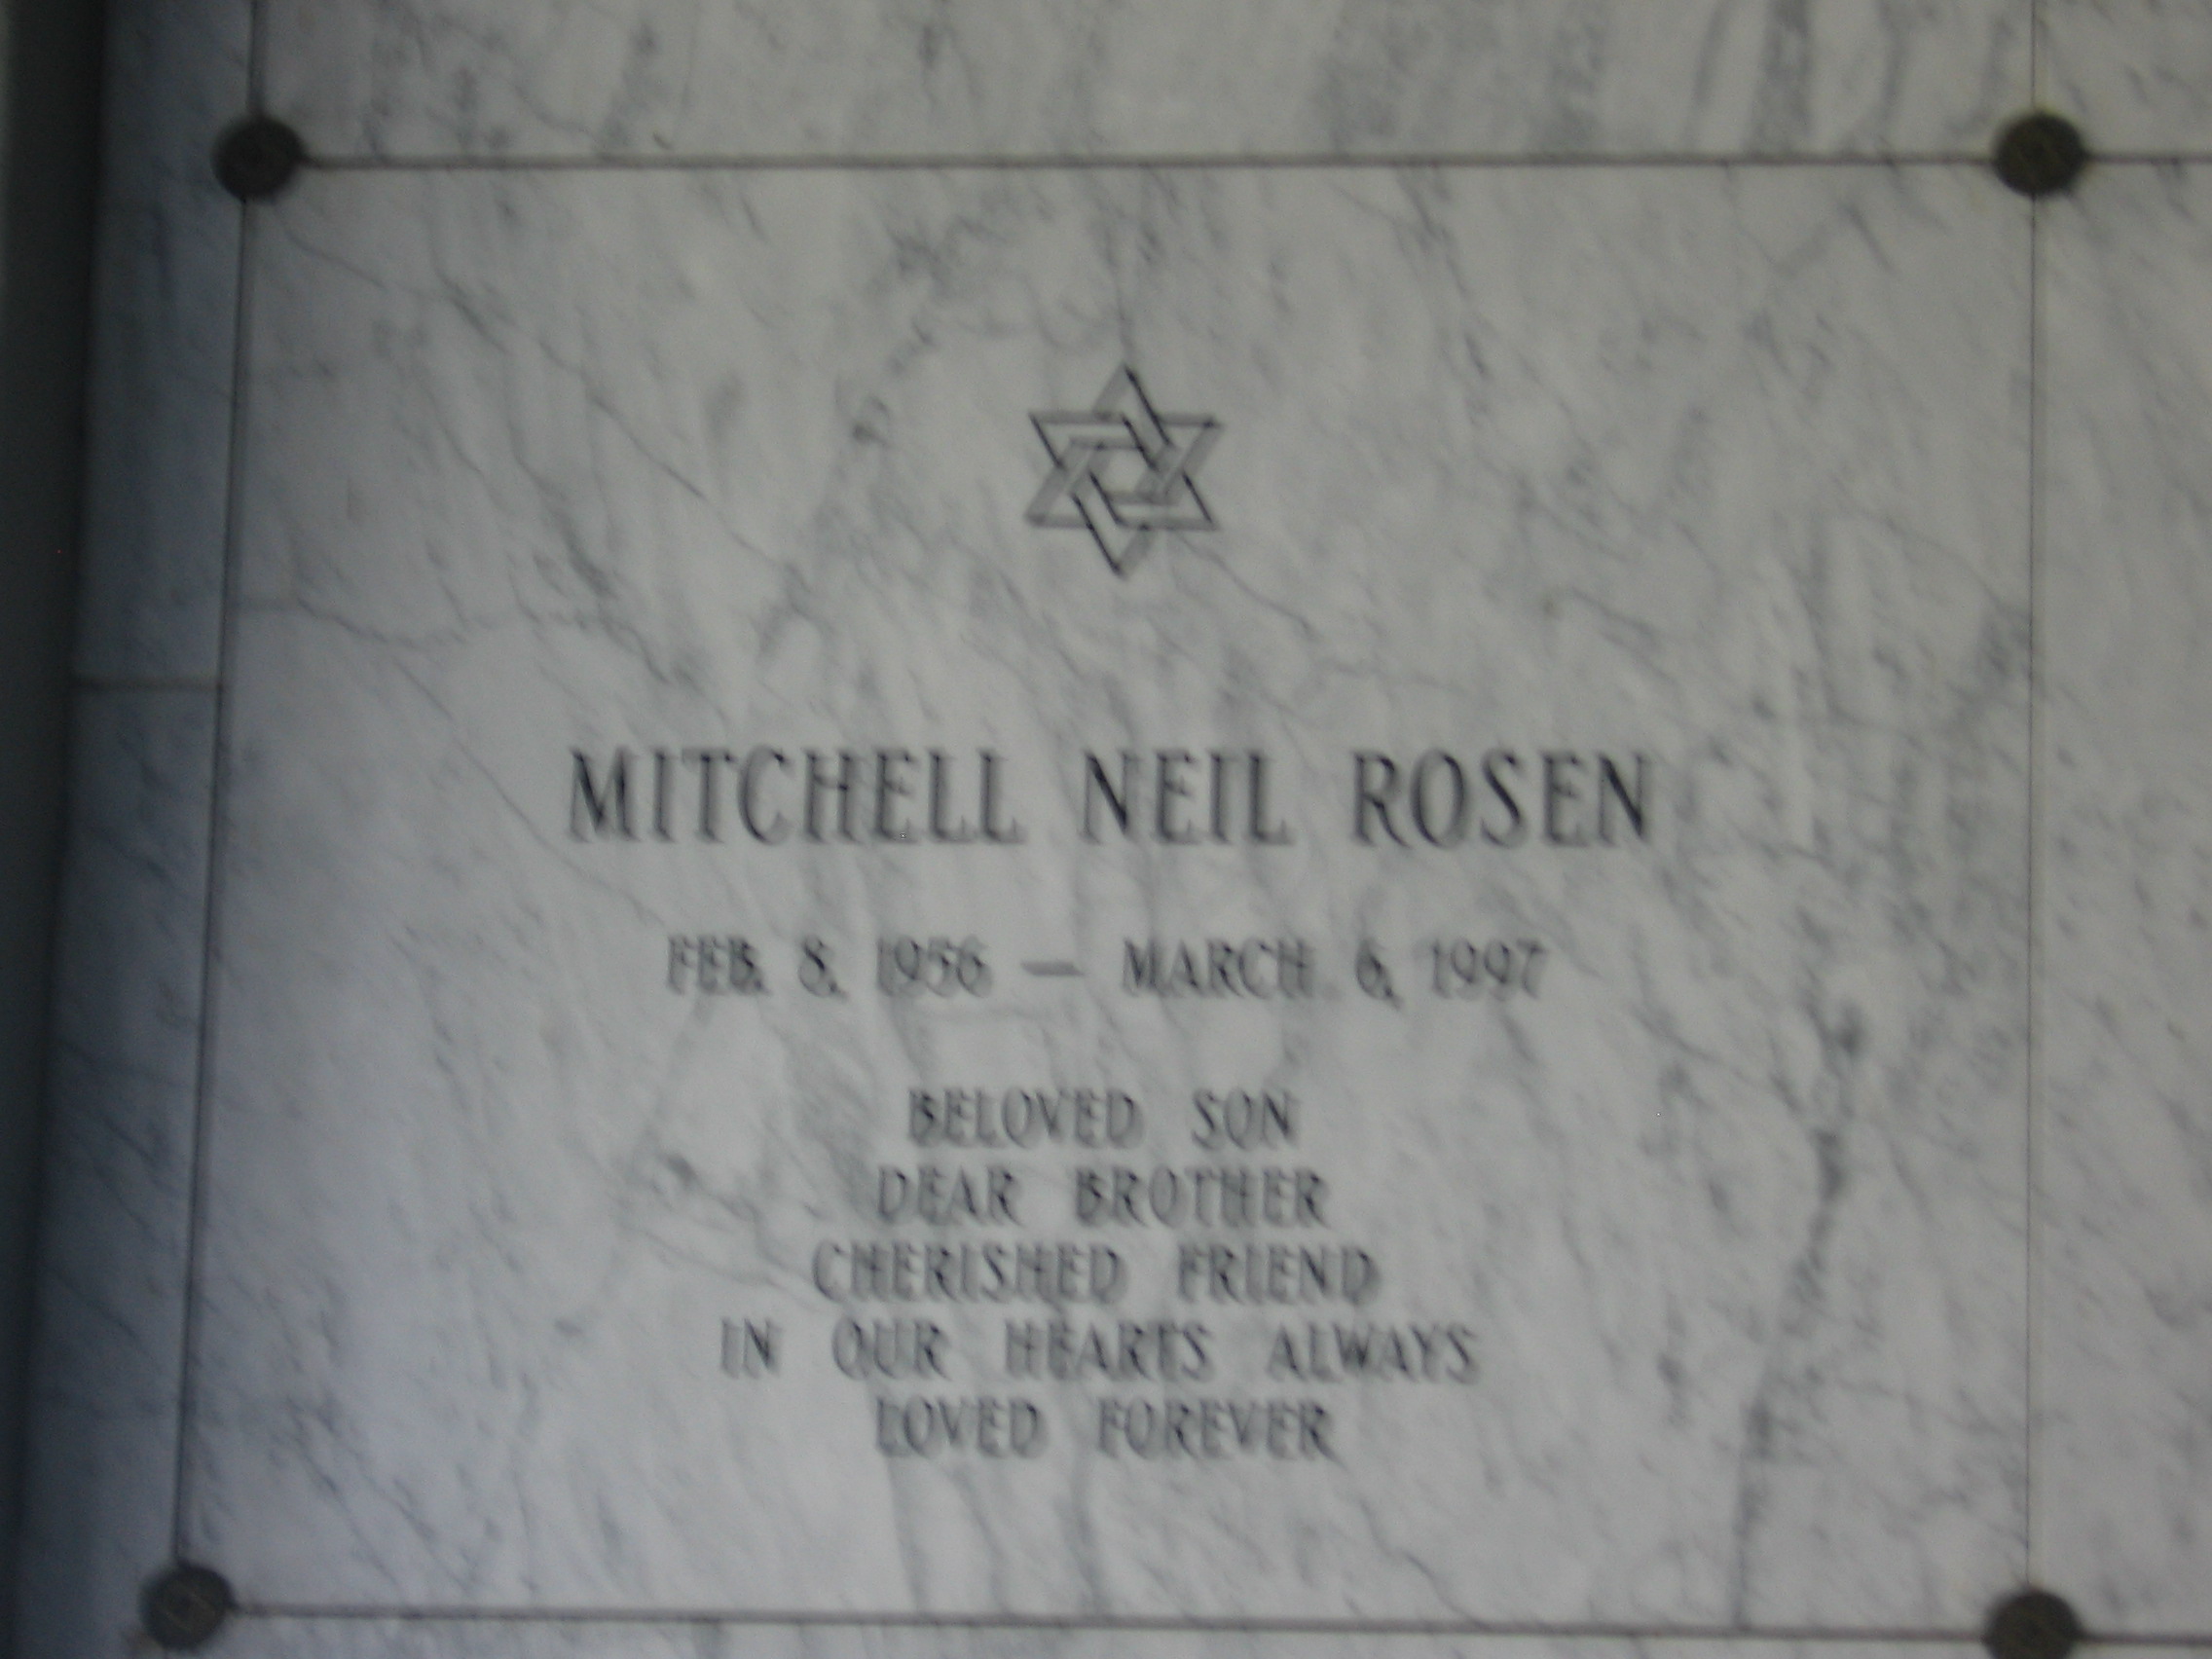 Mitchell Neil Rosen